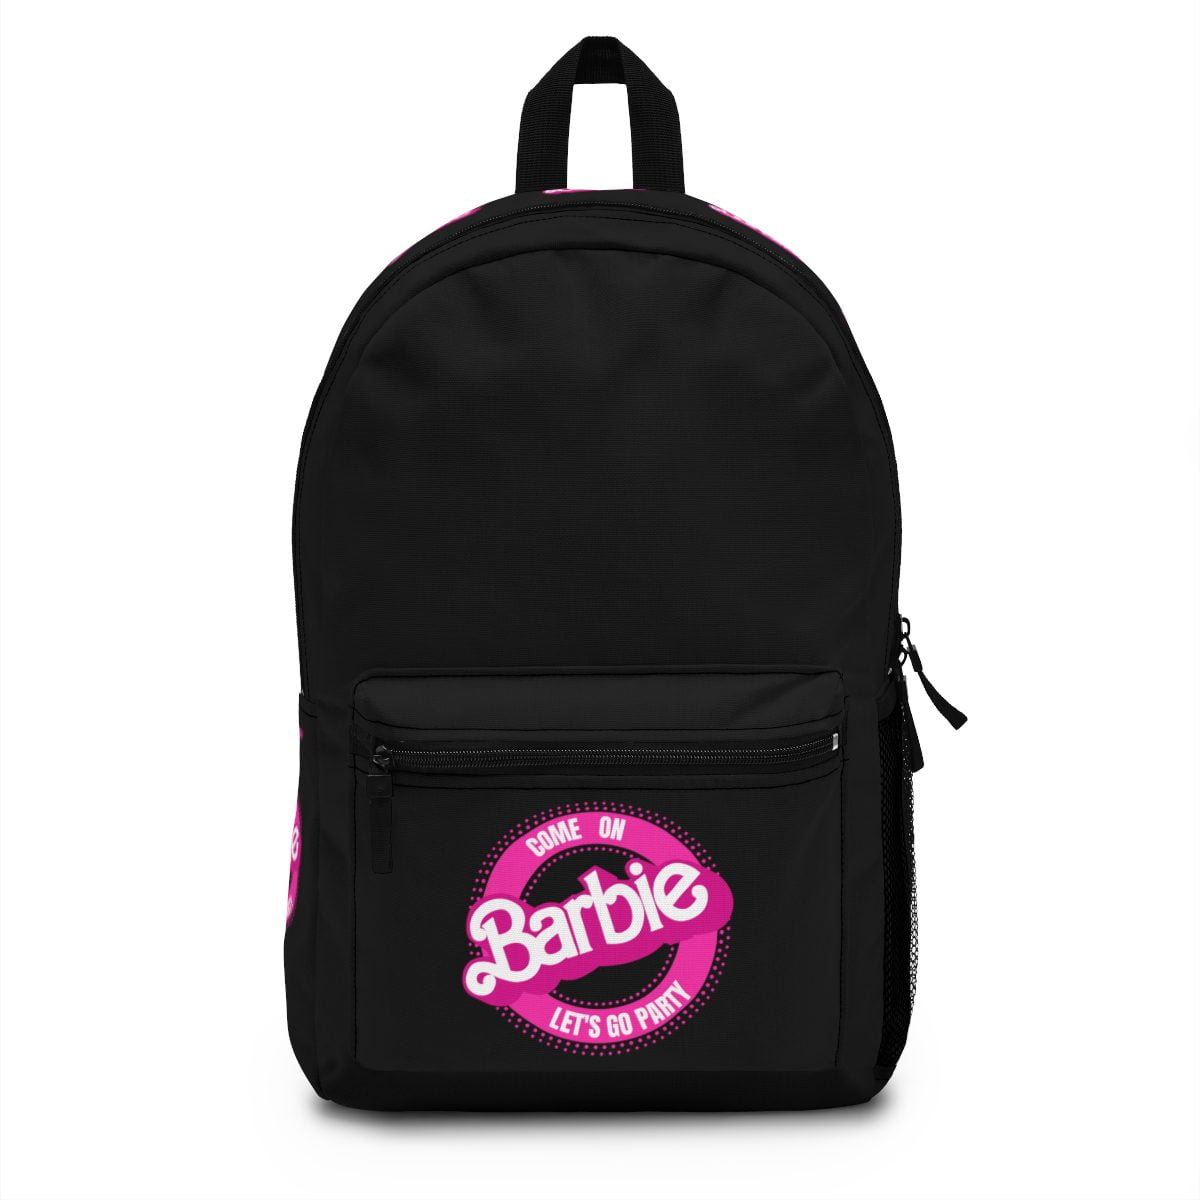 Black Backpack with Circular Classic Barbie Logo Cool Kiddo 10